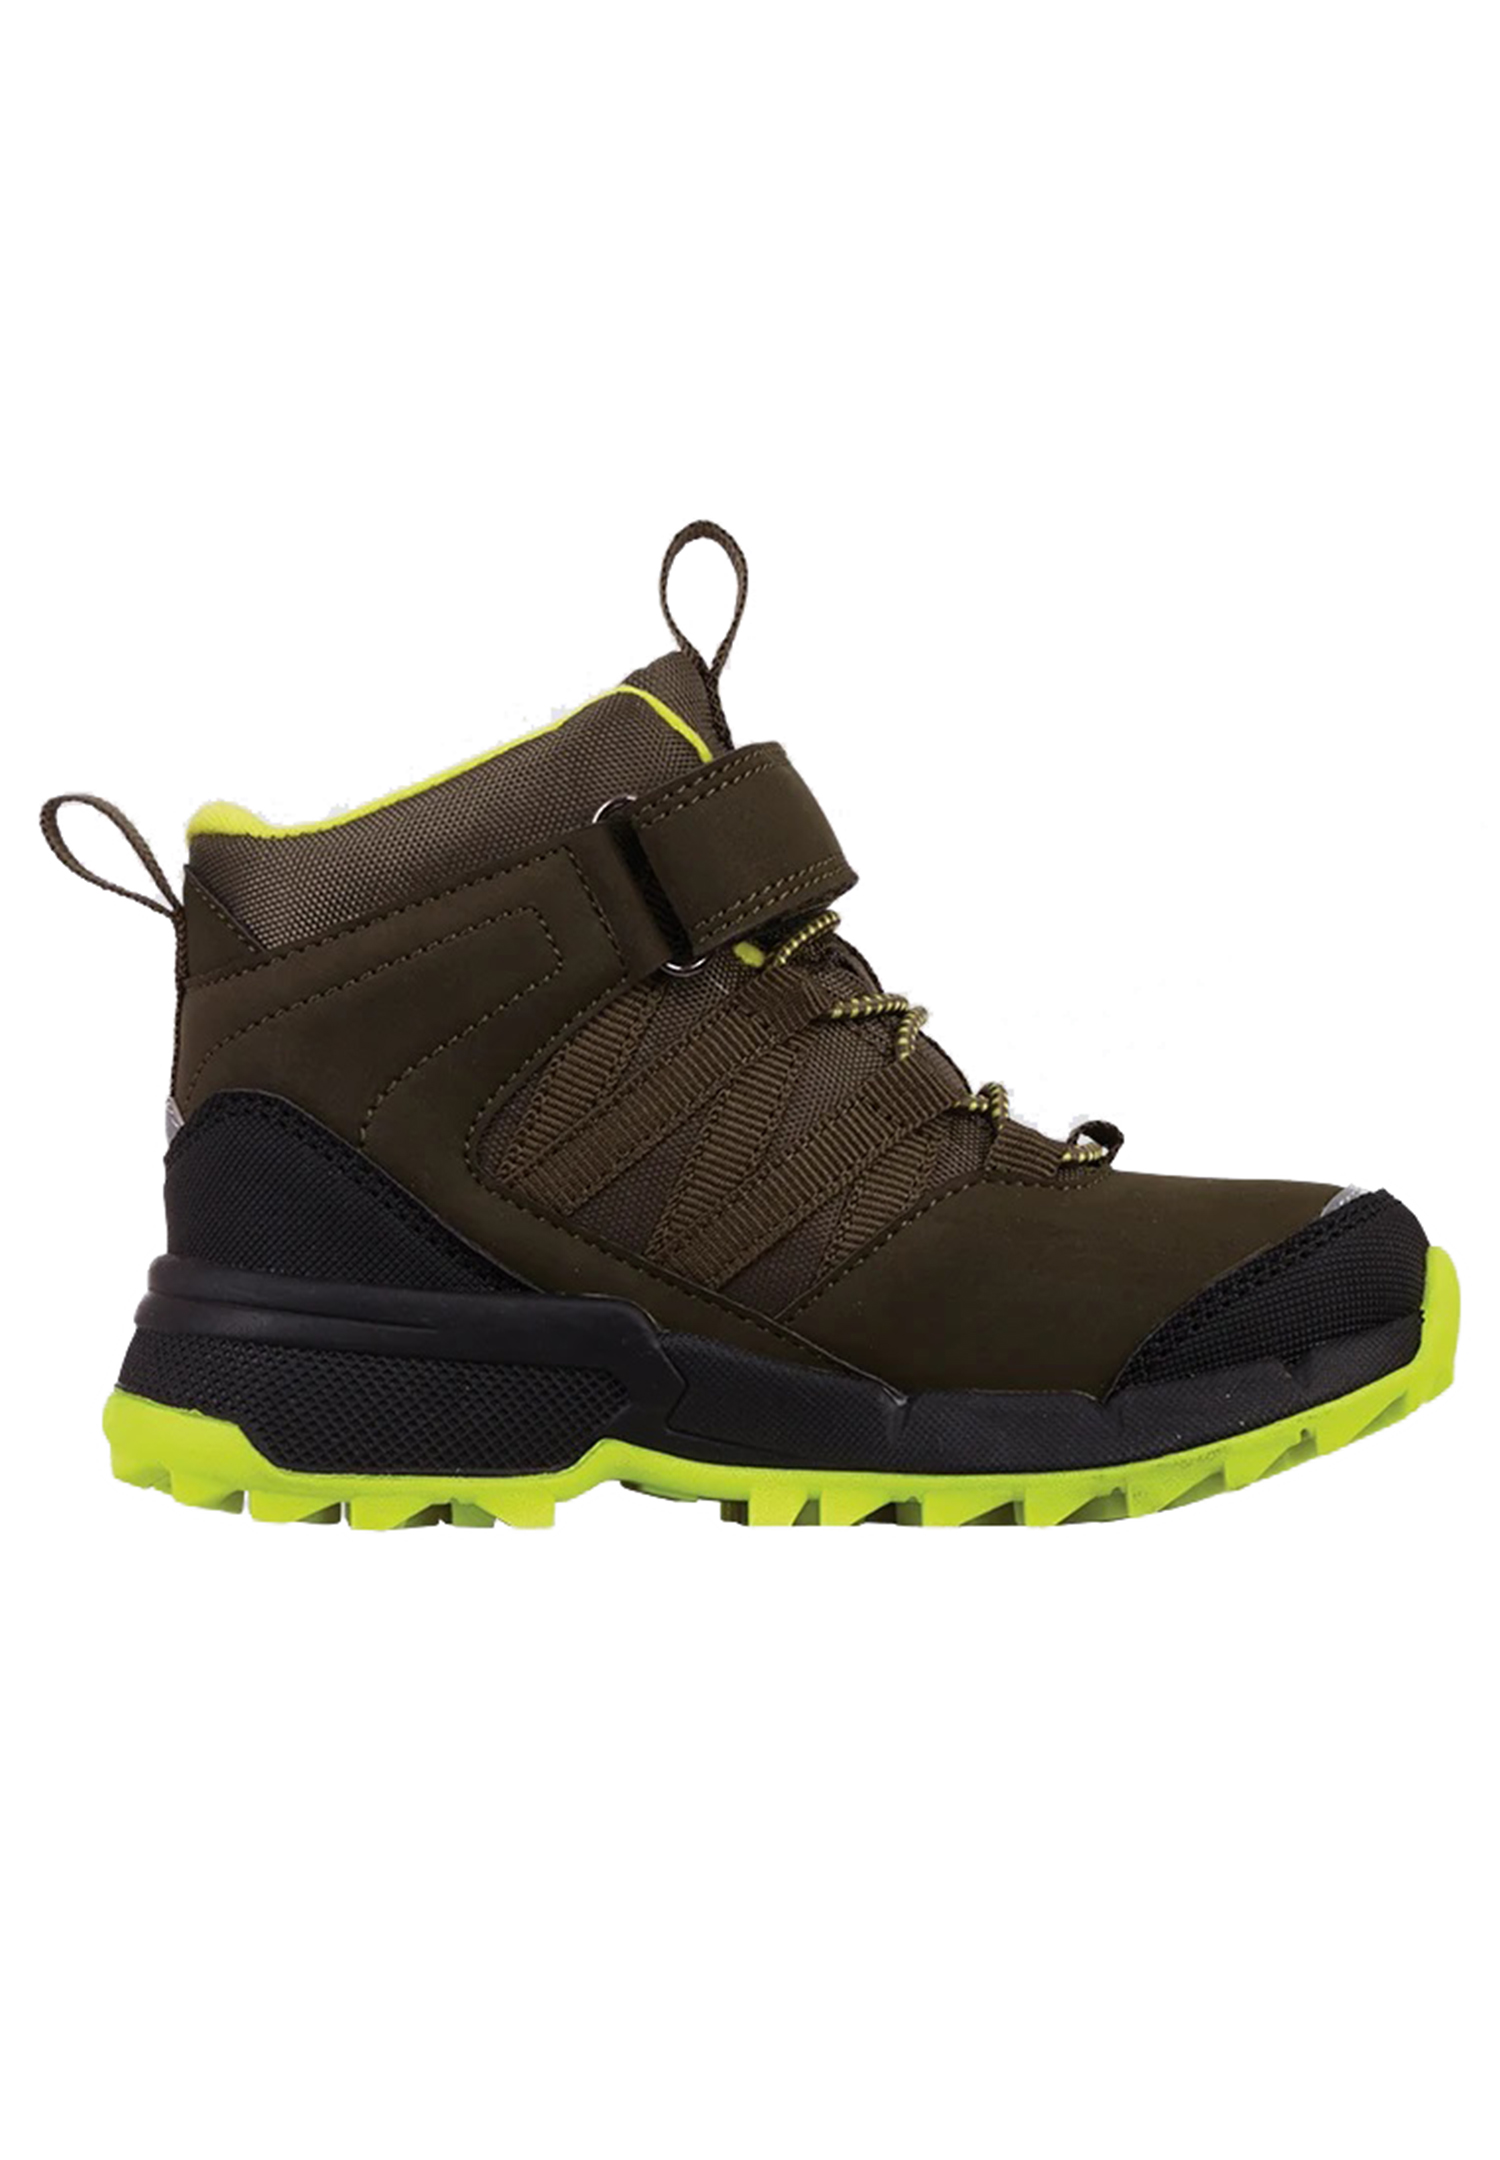 Kappa Unisex Kinder Stiefel Sneaker Stylecode 260897K 3133 grün